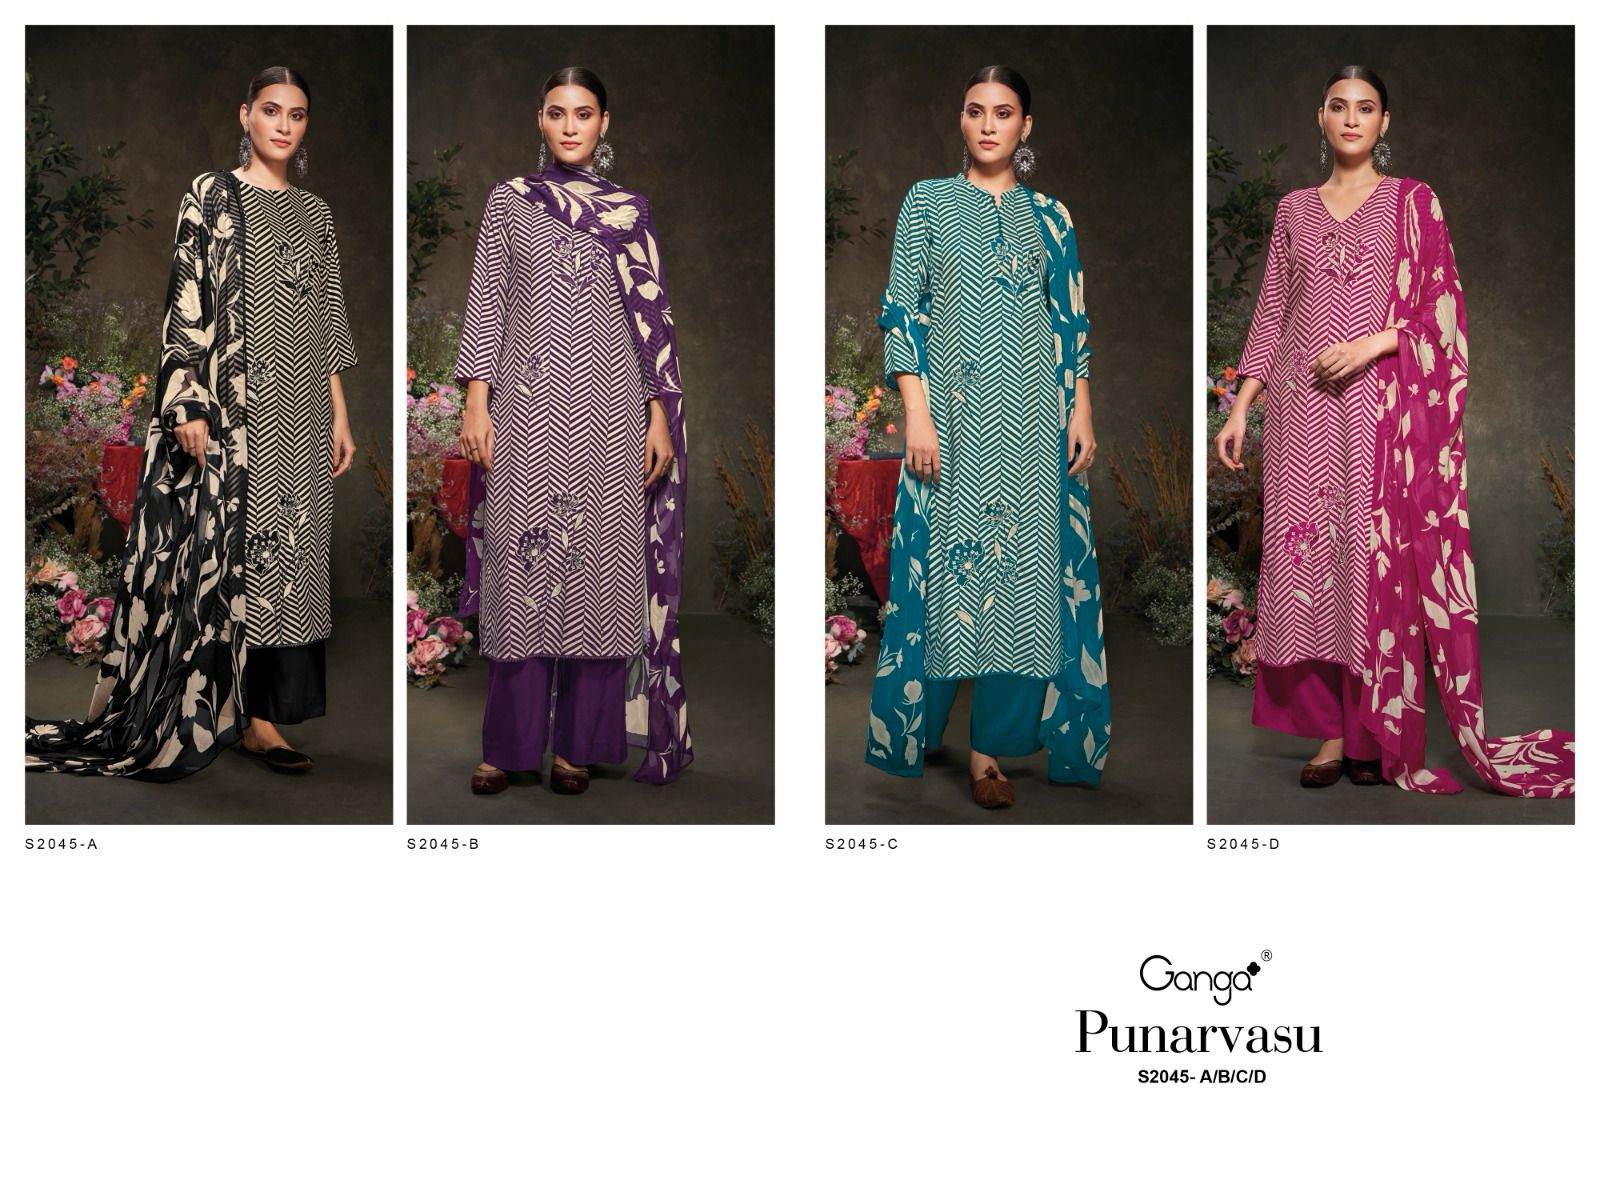 S2045-Abcd Punarvasu Ganga Pashmina Plazzo Style Suits